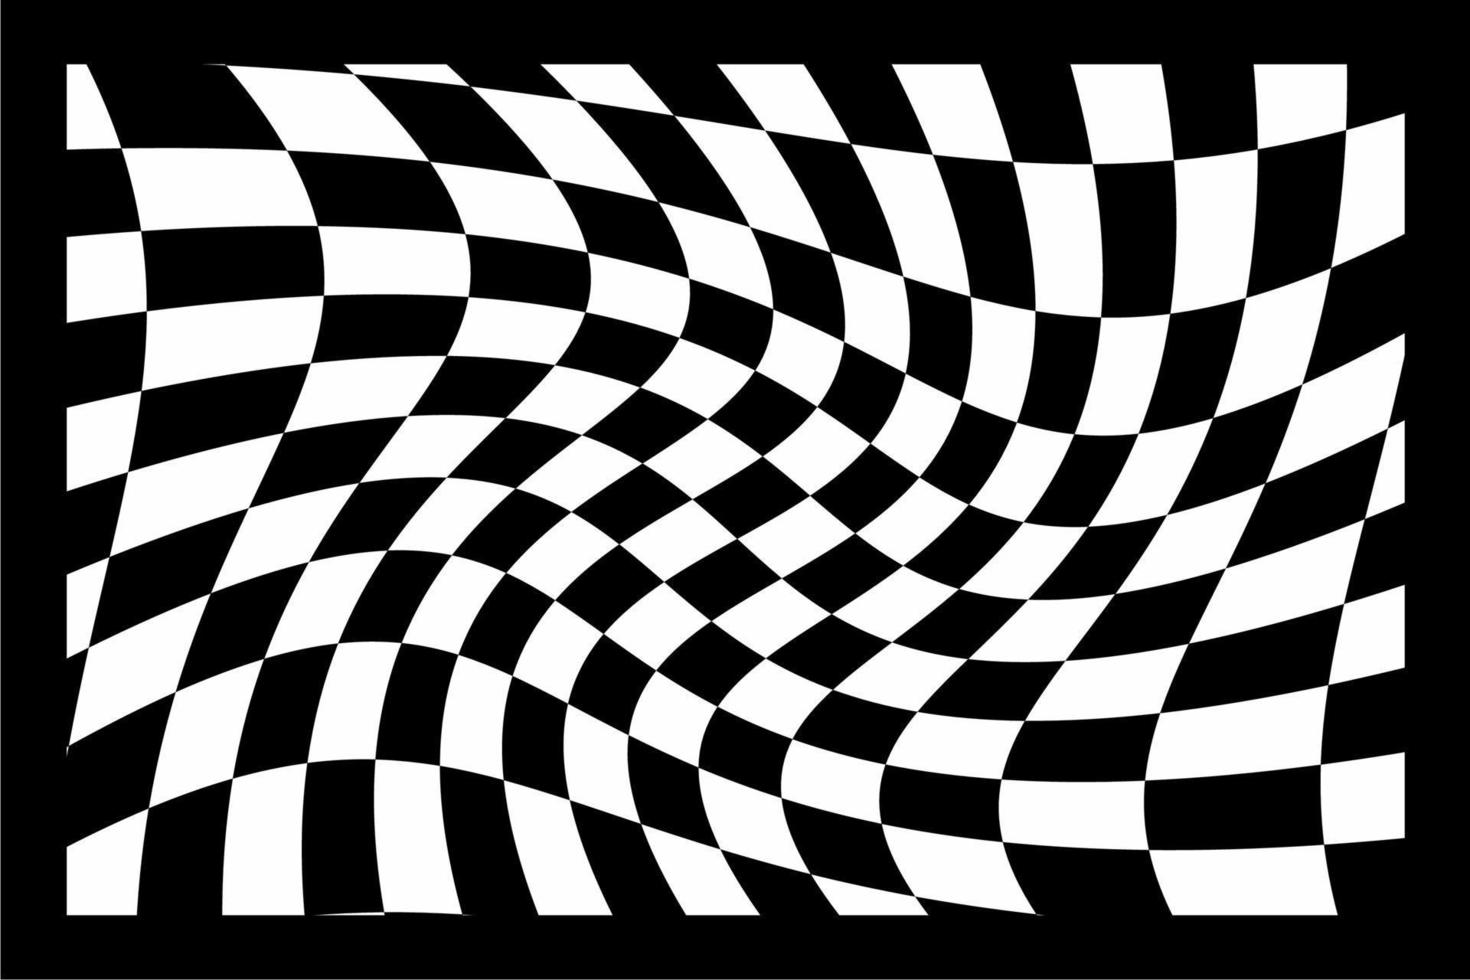 background floor pattern in perspective with chessboard design vector